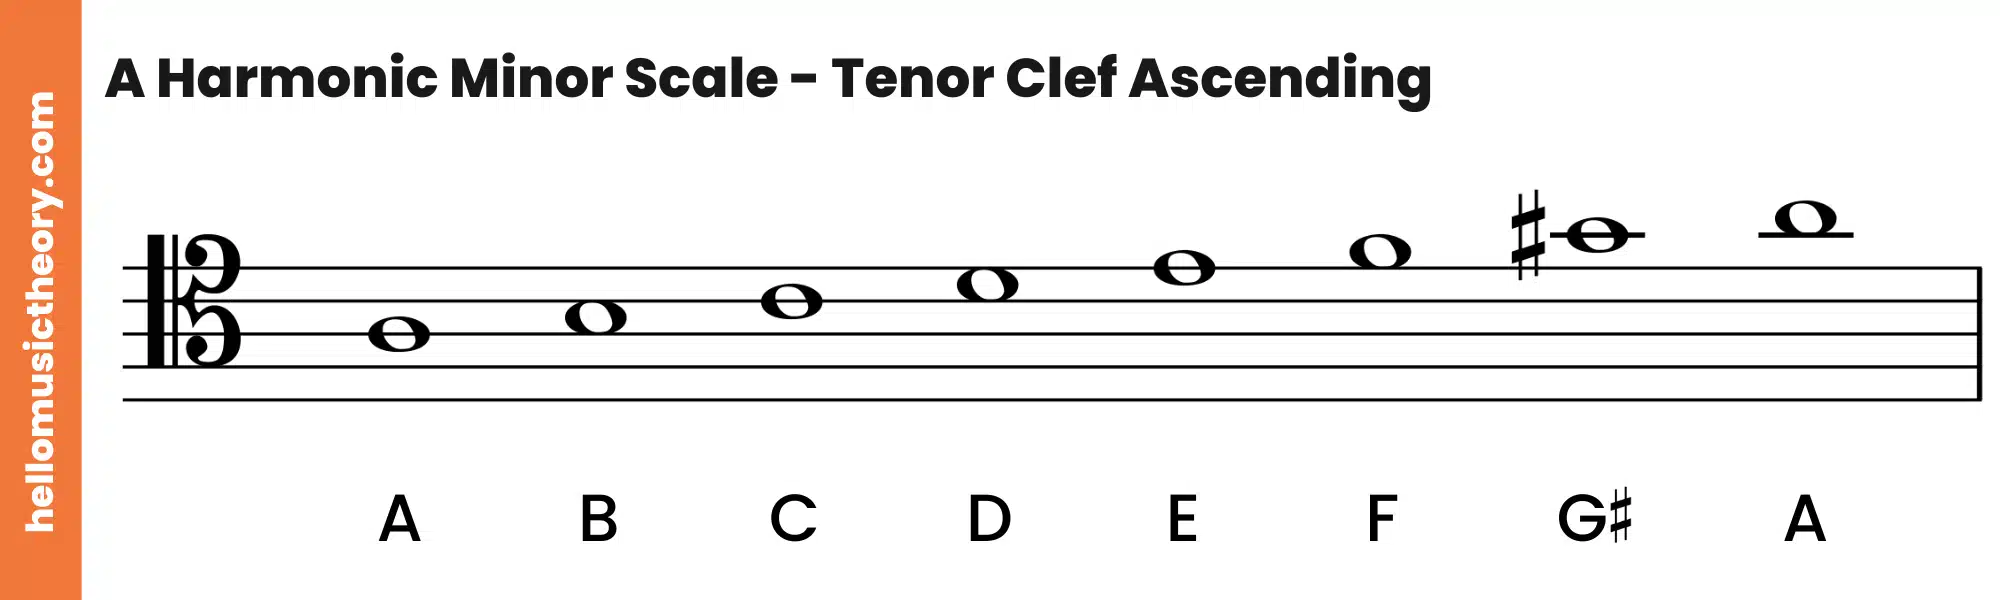 A Harmonic Minor Scale Tenor Clef Ascending